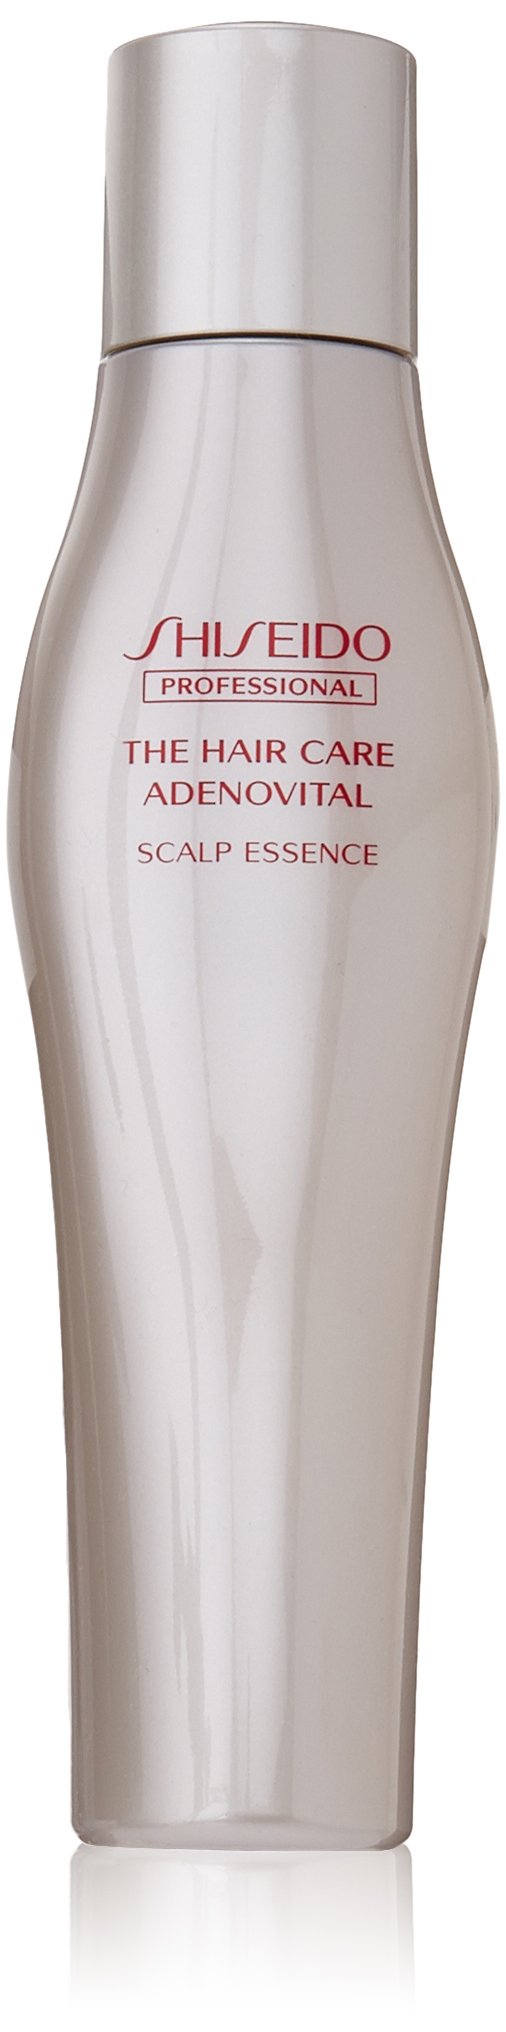 Shiseido Adenovital Scalp Essence 180ml (quasi-drug)